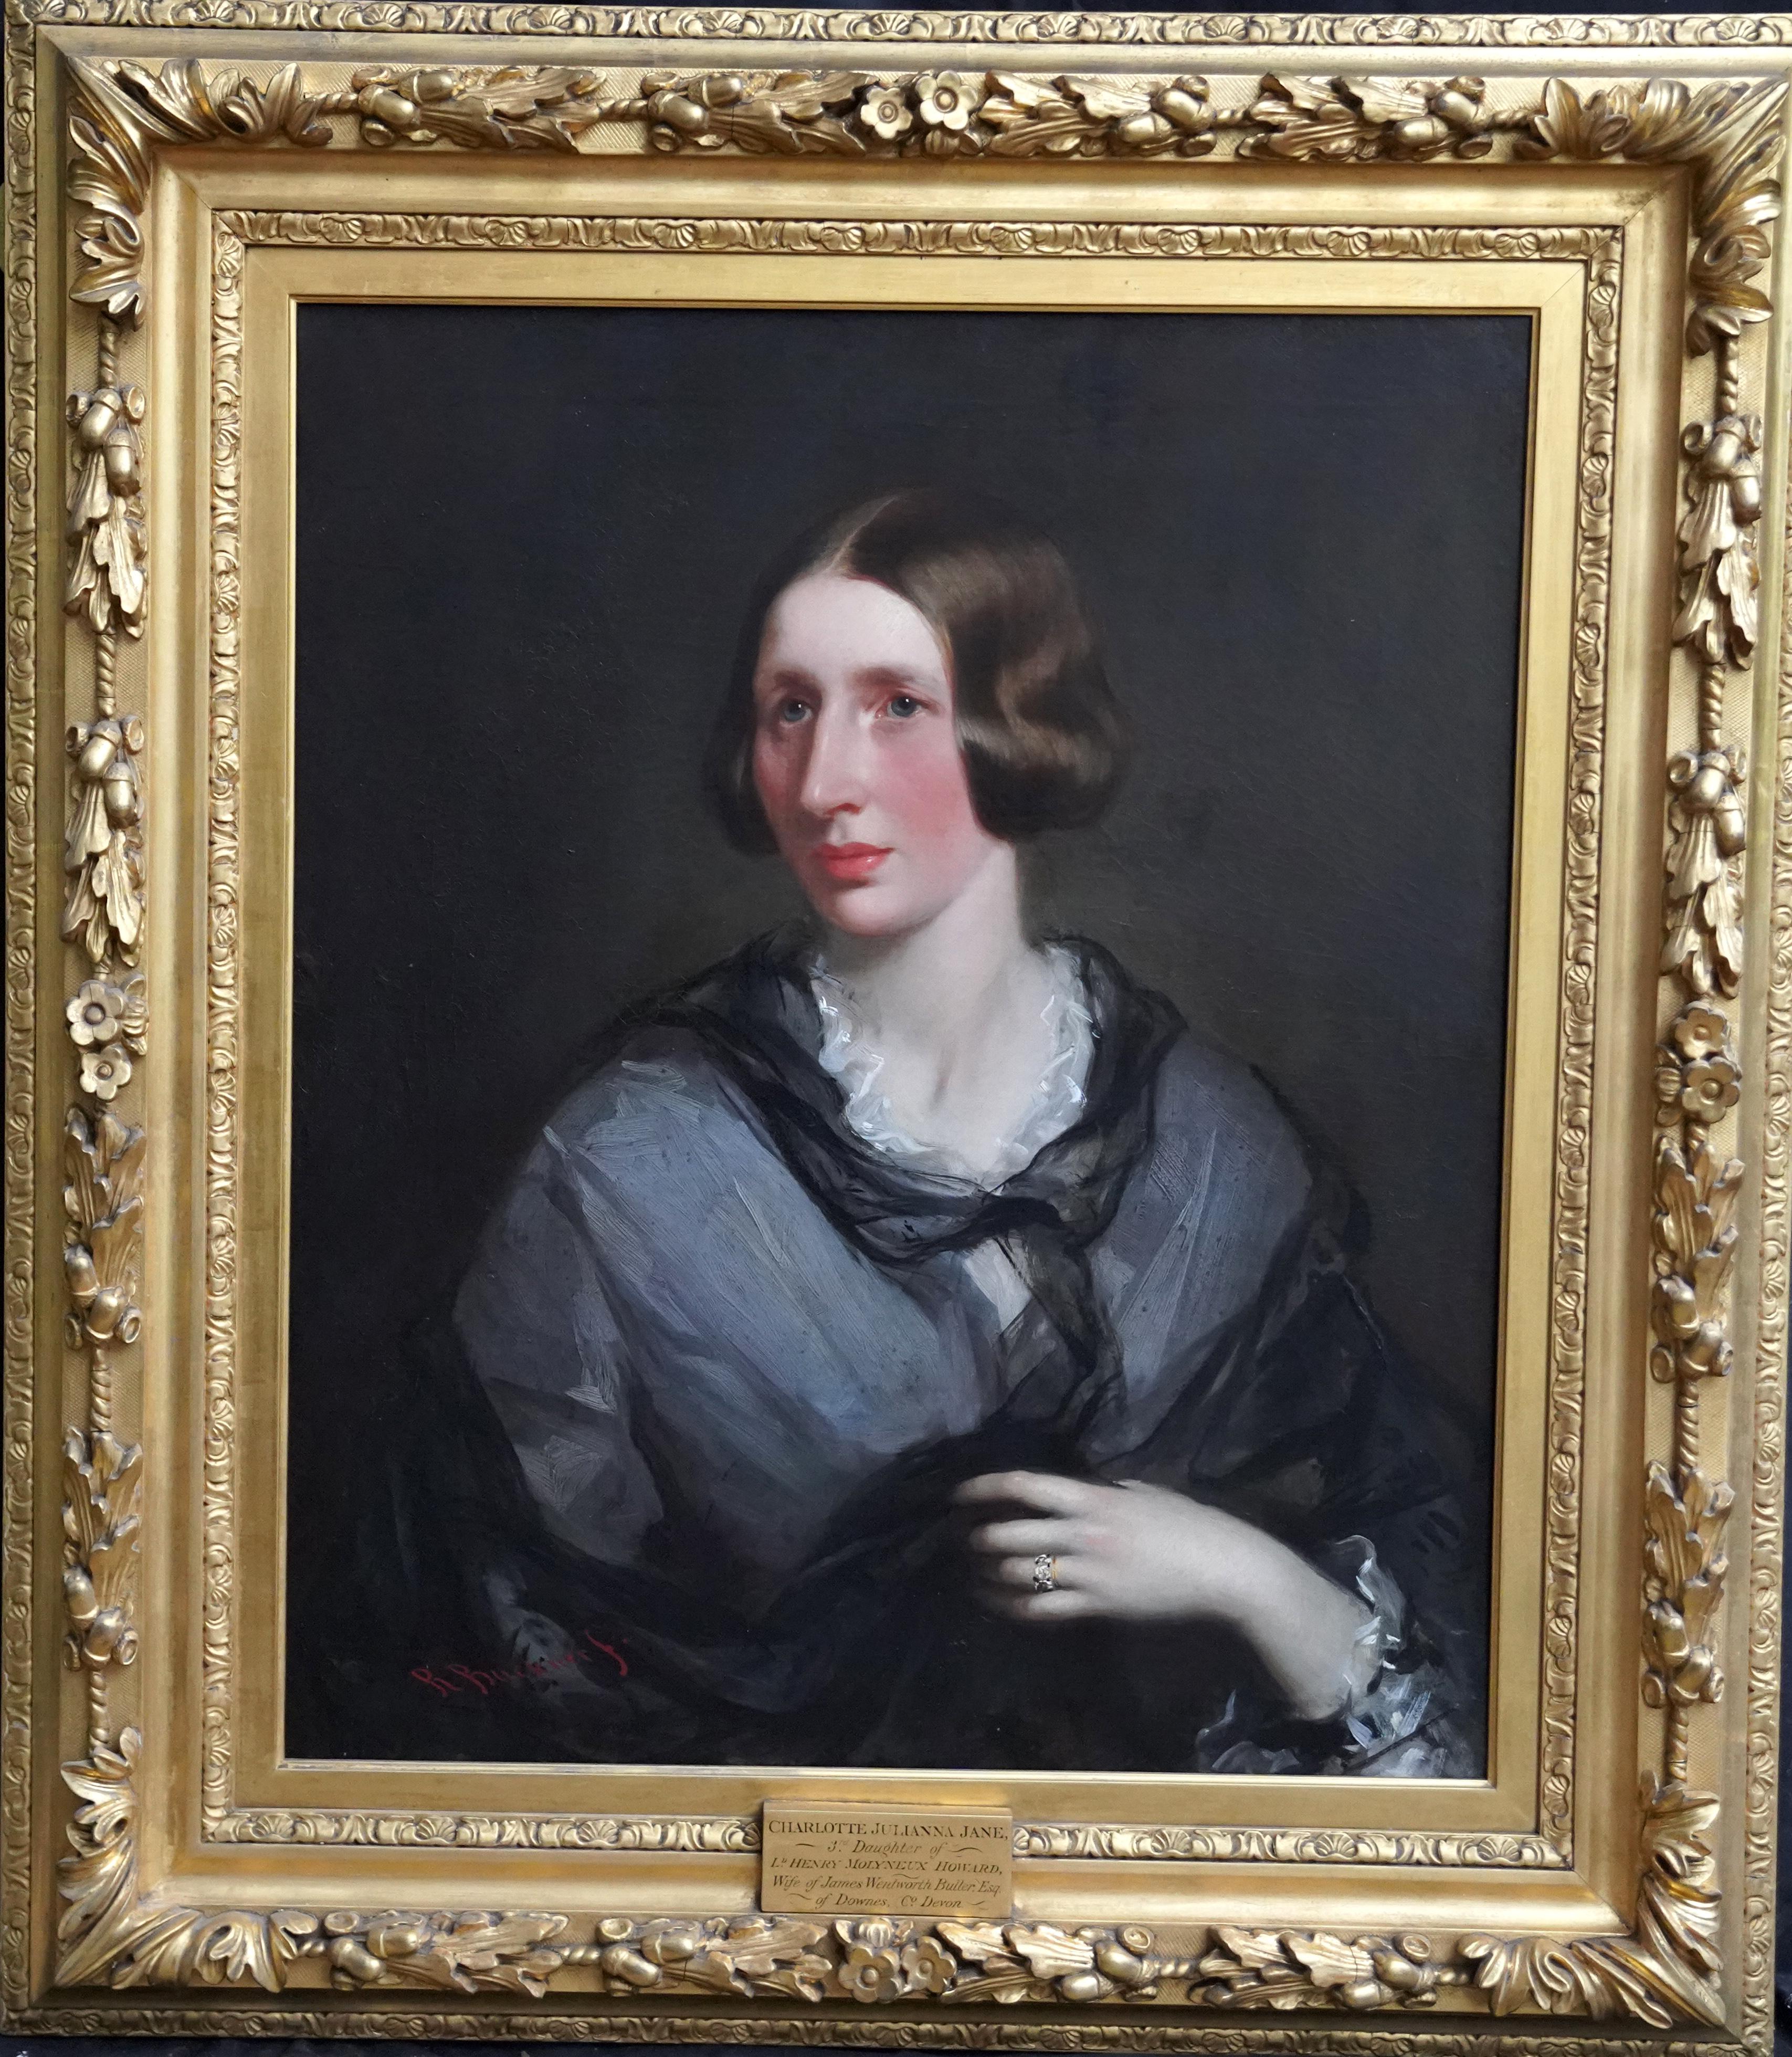 Richard Buckner Portrait Painting - Portrait of Charlotte Julianna Jane Howard - British Victorian art oil painting